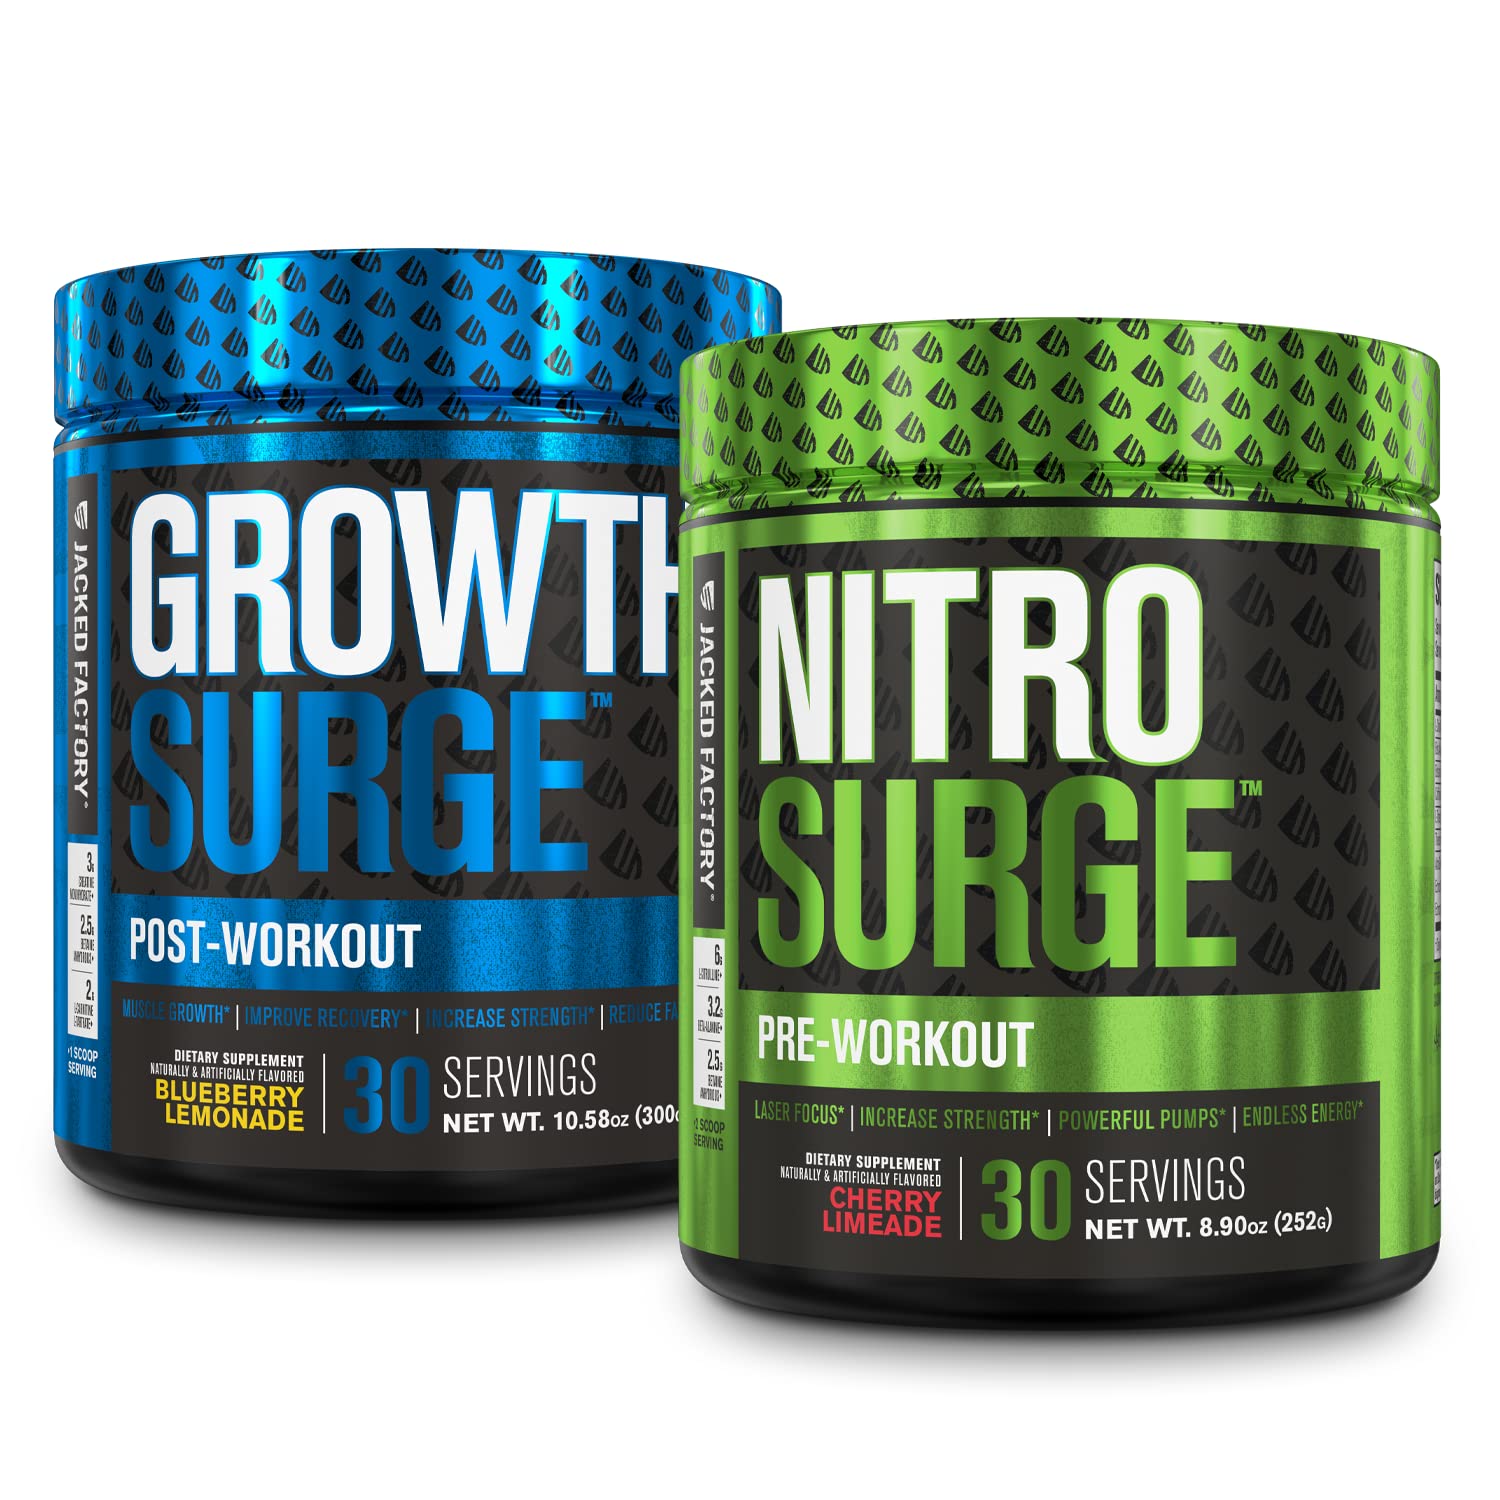 Jacked Factory Nitrosurge Pre-Workout Supplement & Growth Surge Post Workout Muscle Builder Bundle